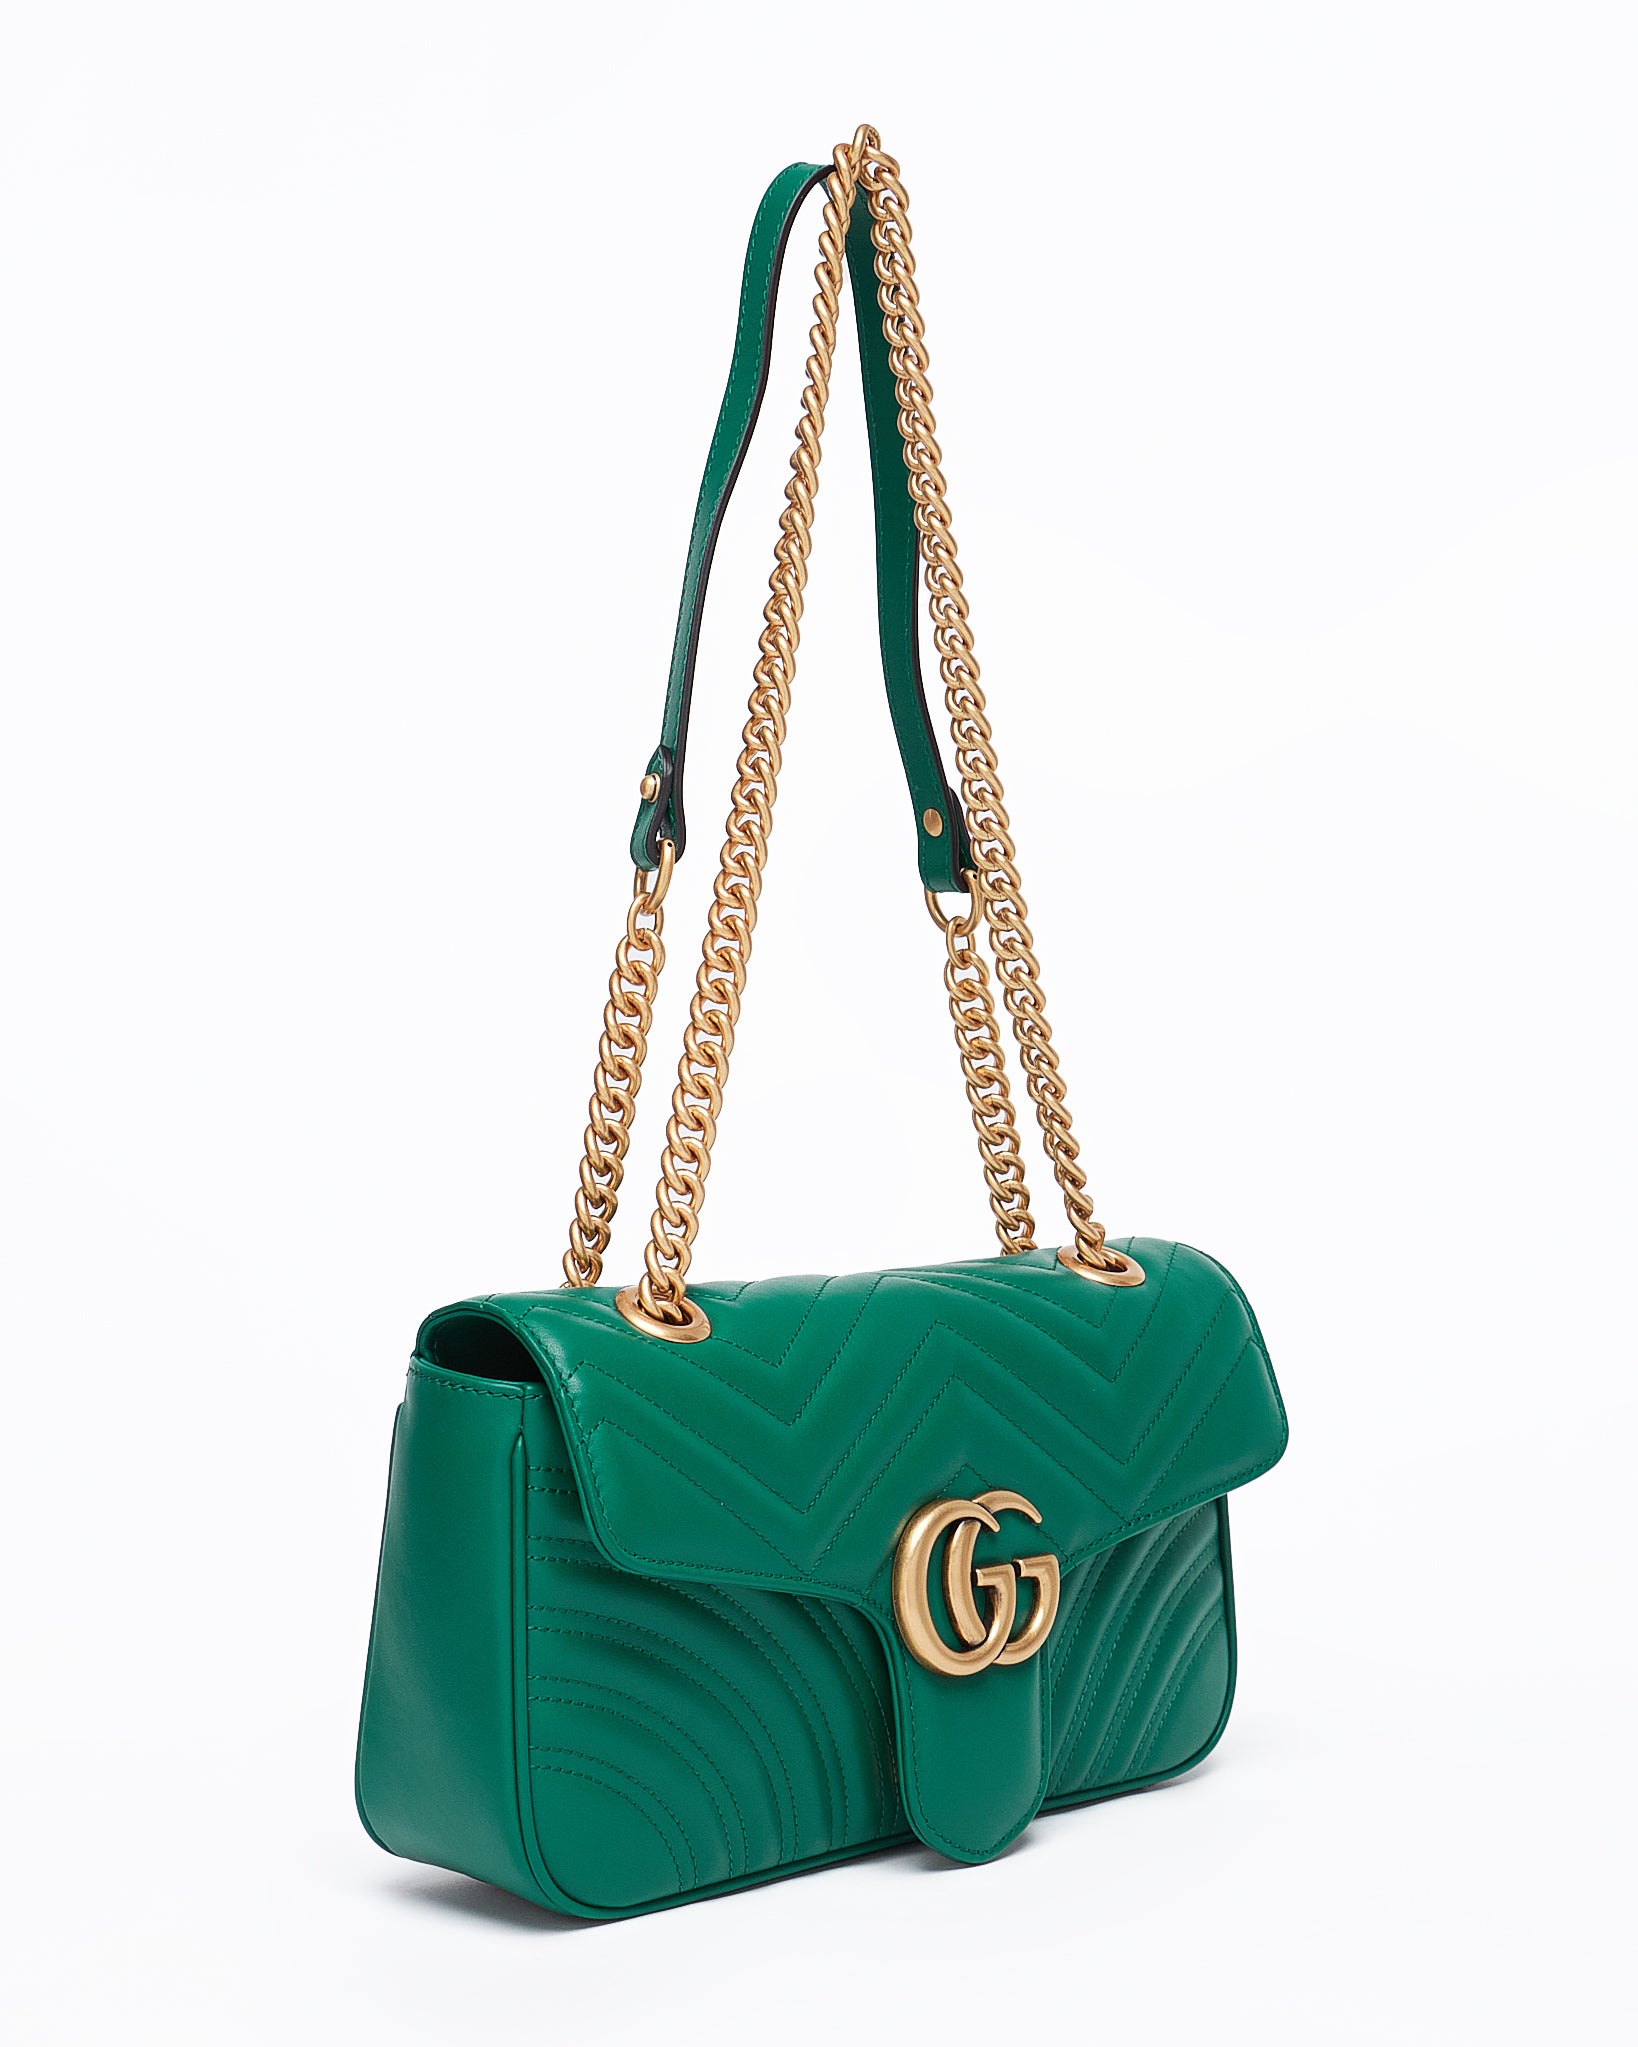 GUC Marmont Lady Green Shoulder Bag 185